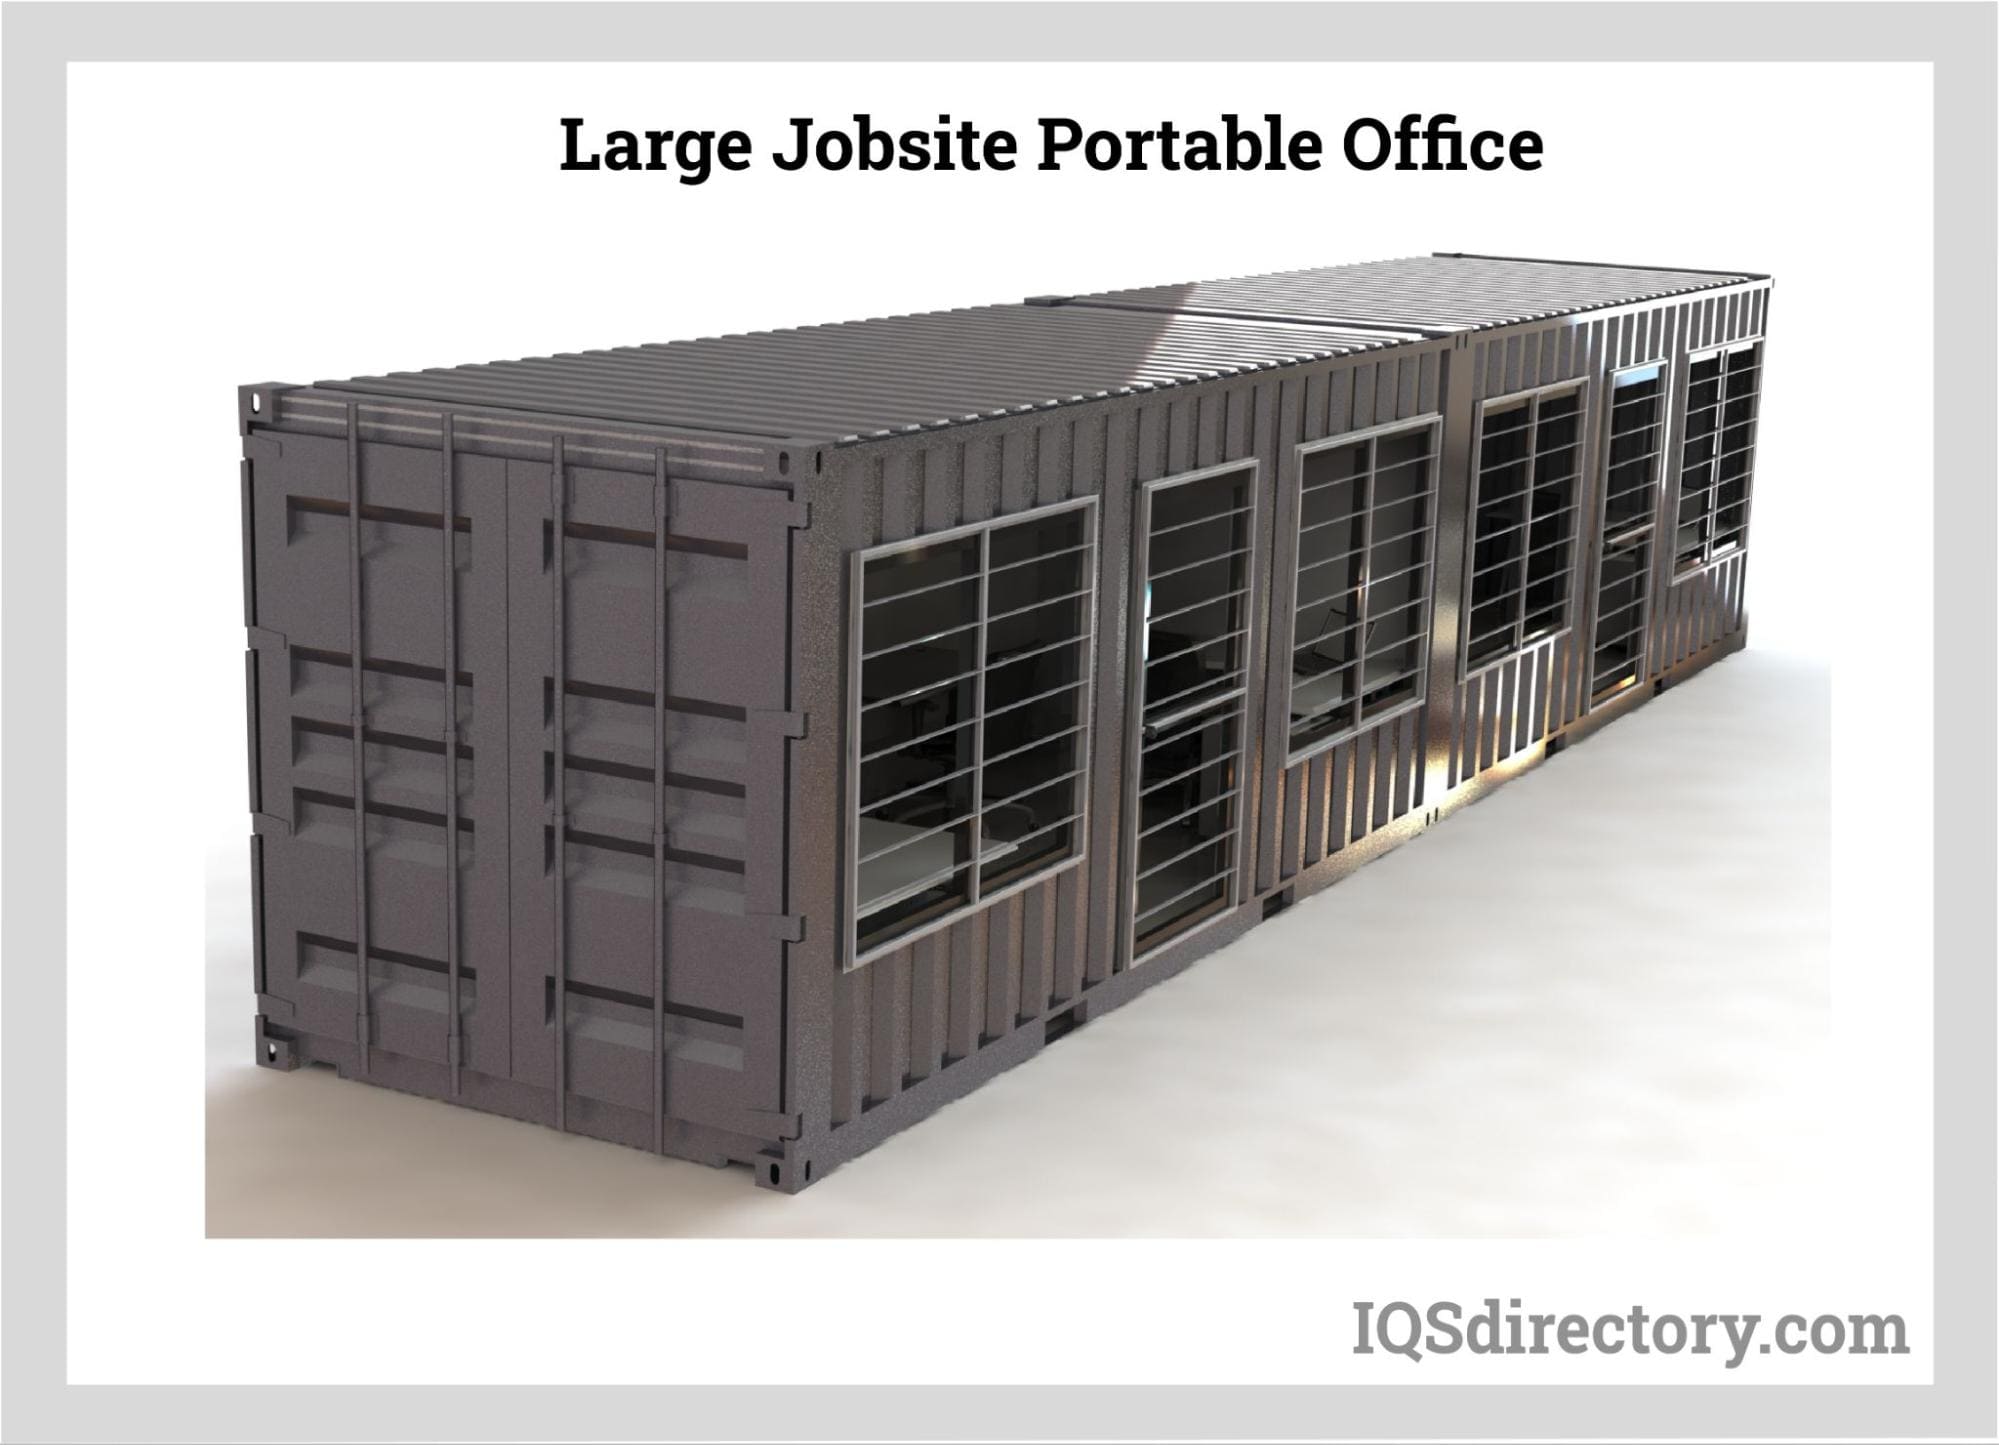 Large Jobsite Portable Office